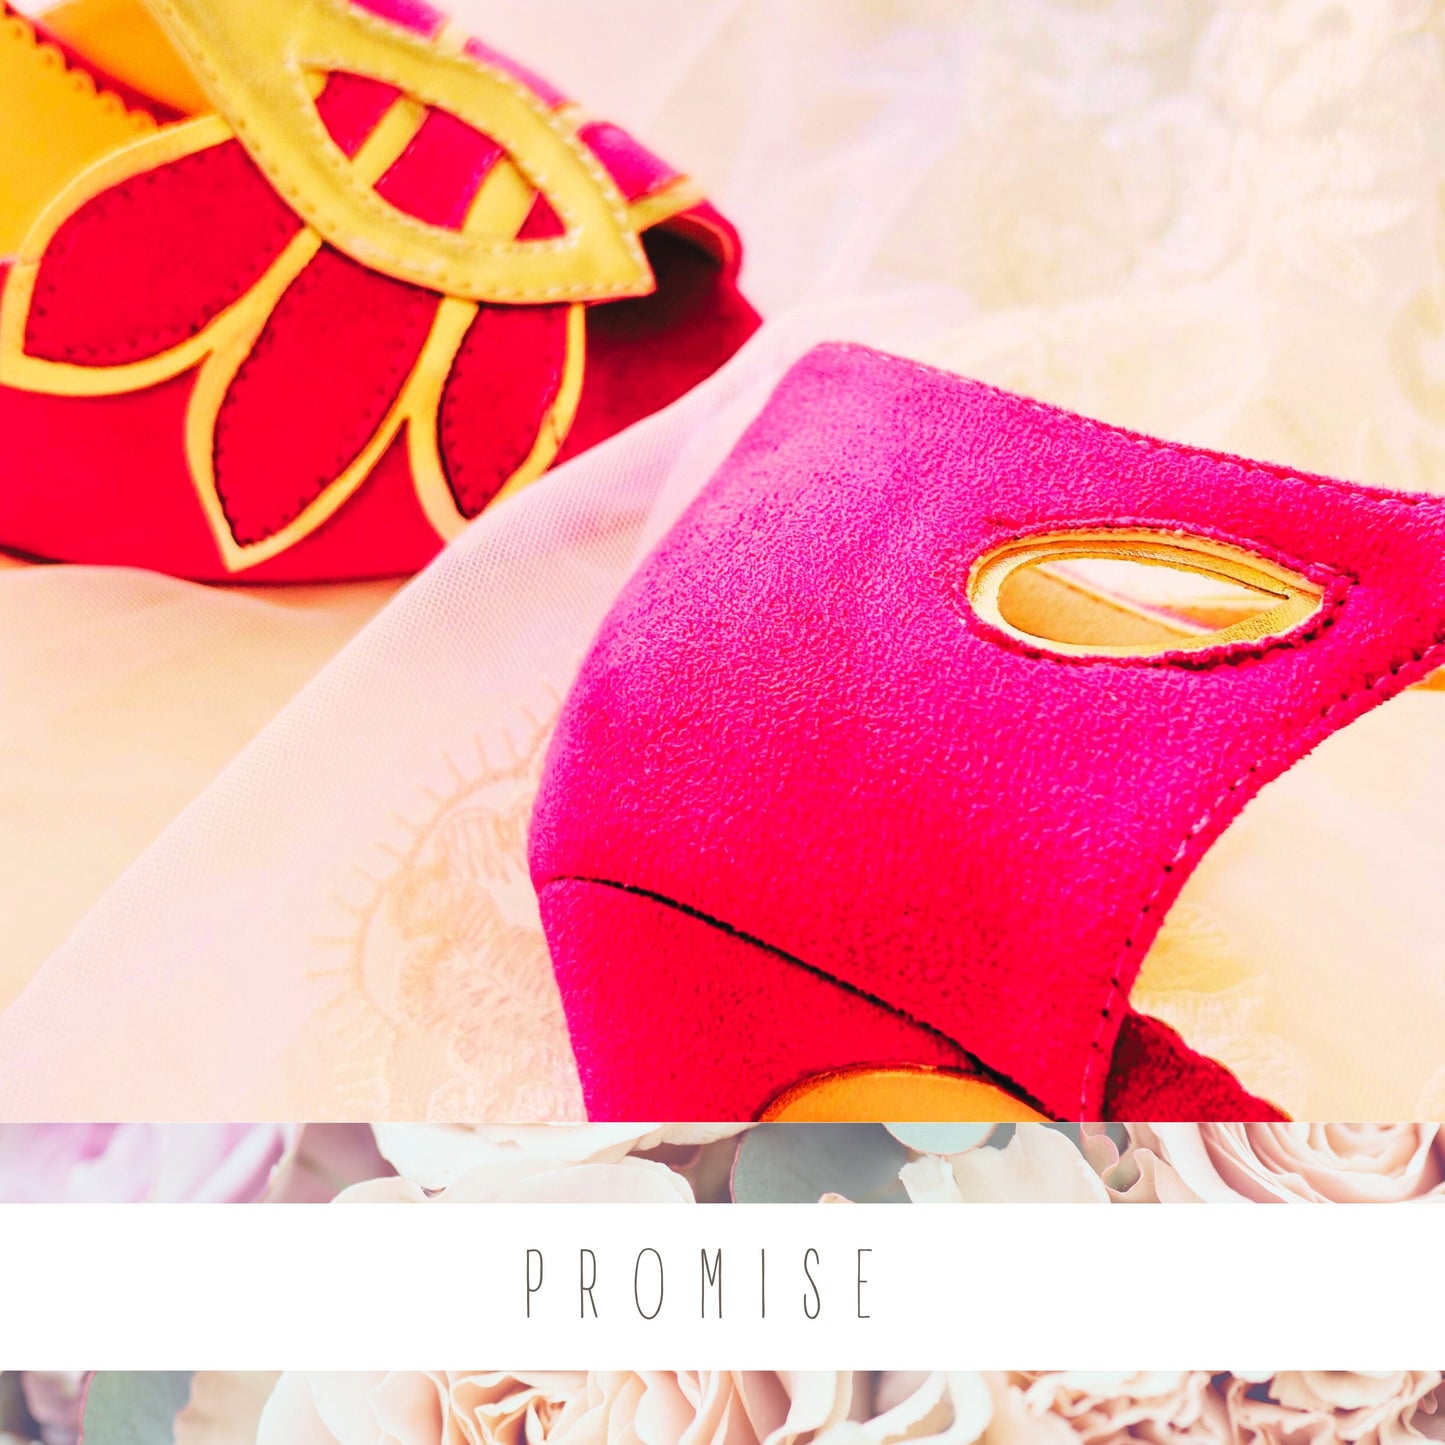 promise wedding shoes